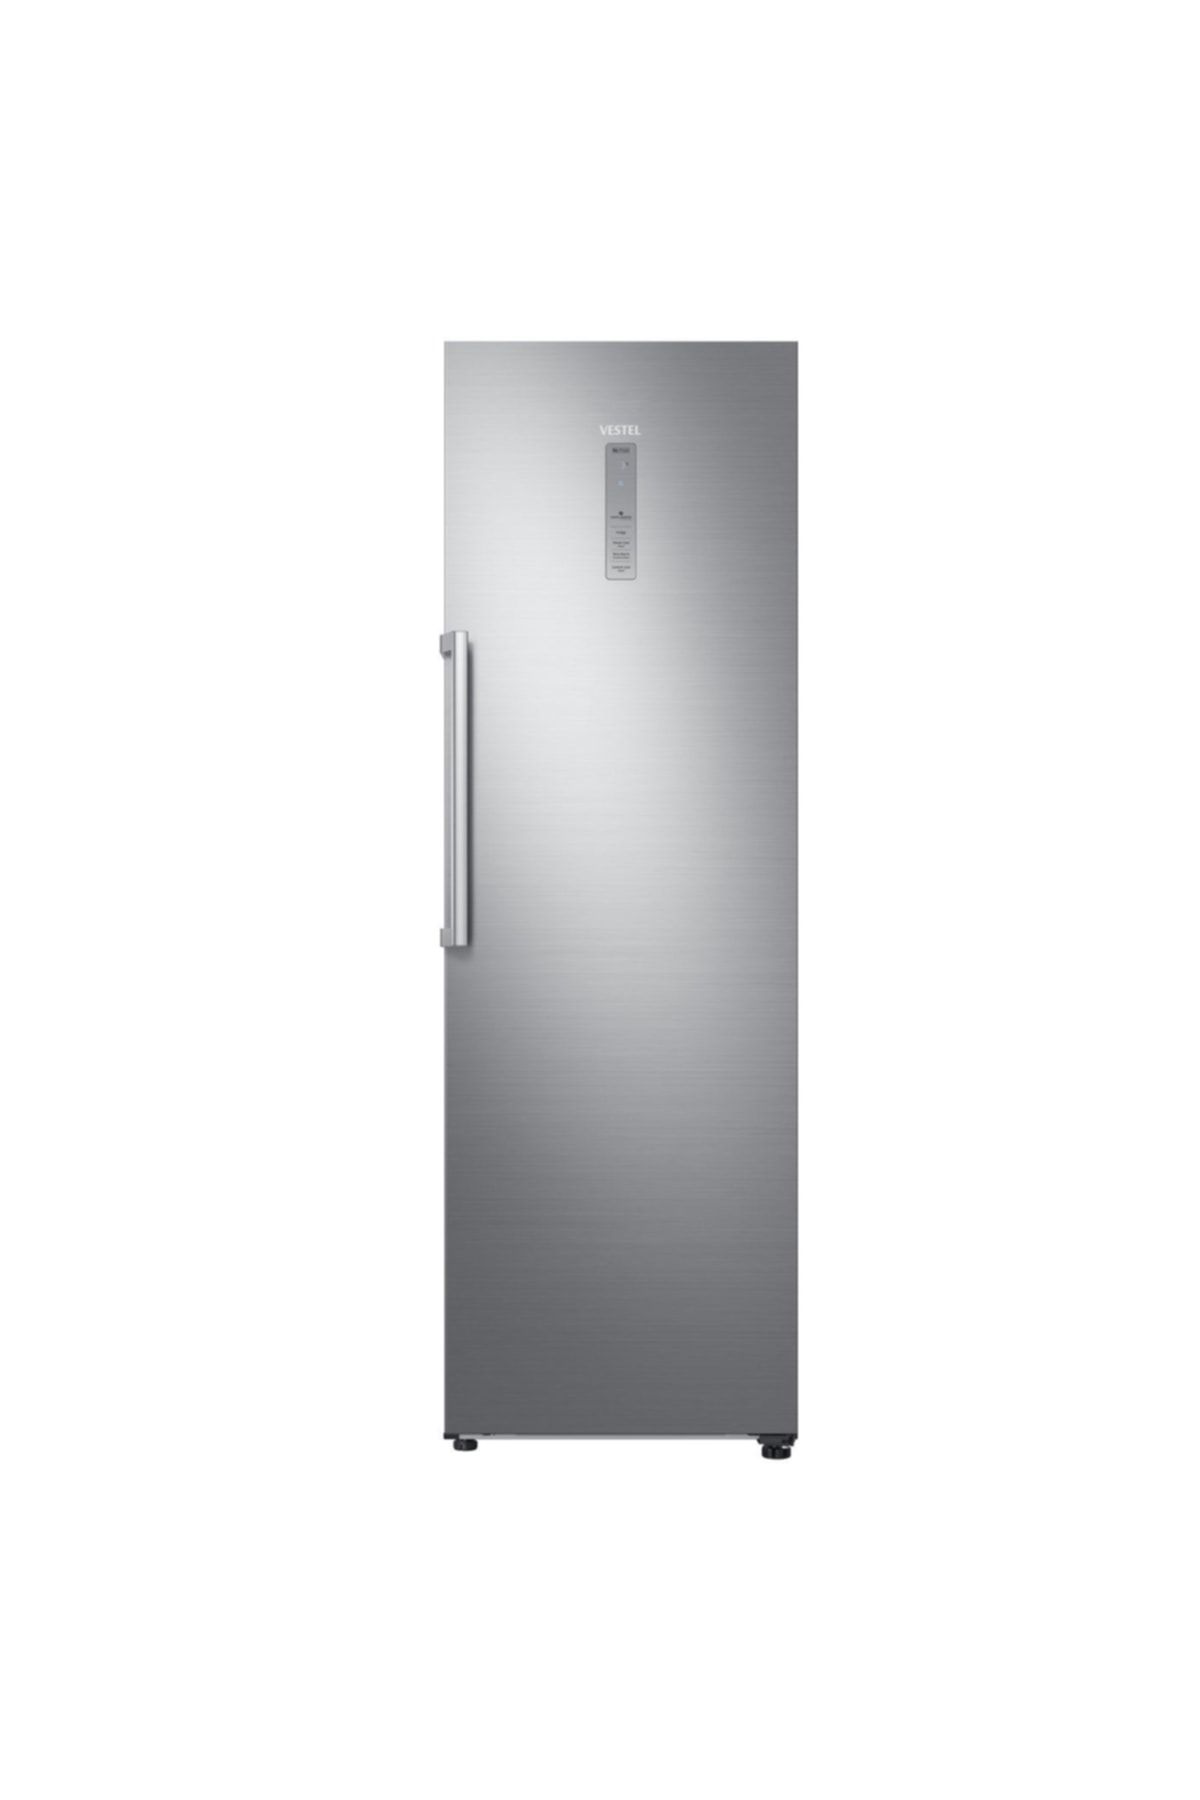 Холодильник с морозильником samsung. Холодильник самсунг rr39m7140sa. Samsung RR-39 m7140sa. Морозильник Samsung rz32m7110sa, серебристый. Samsung rr39m7140sa/WT серебристый.